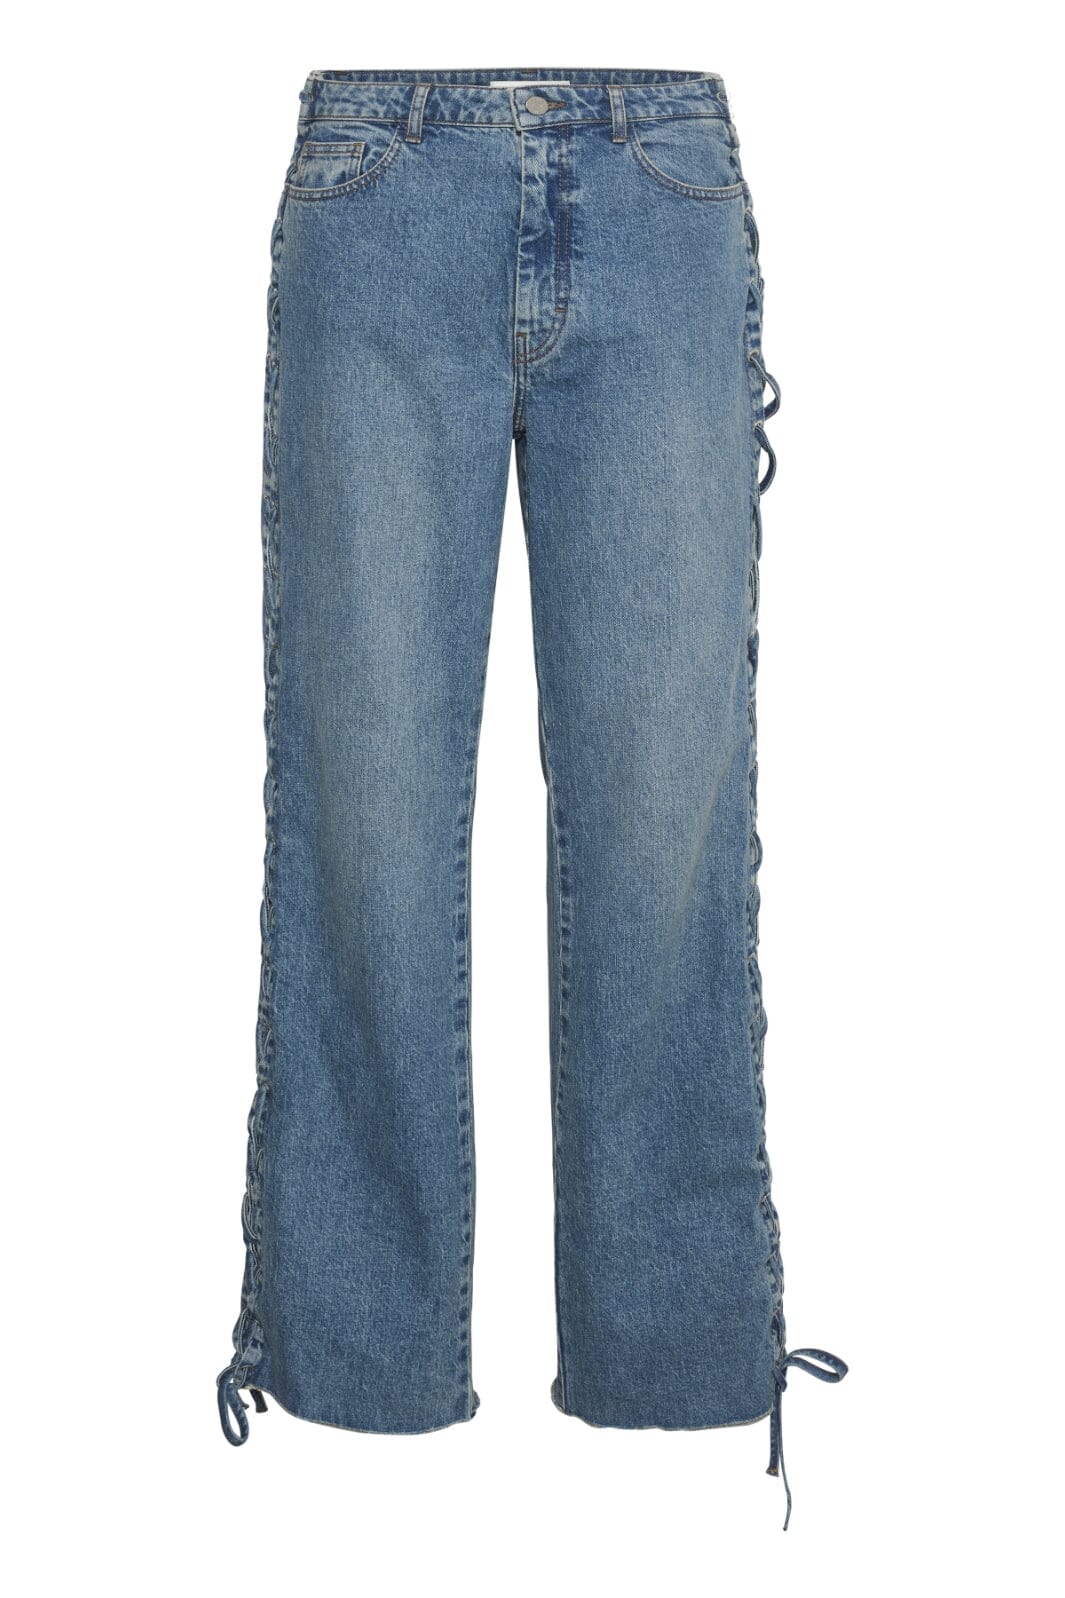 Gestuz - SaimaGZ MW string jeans - Mid blue washed Jeans 